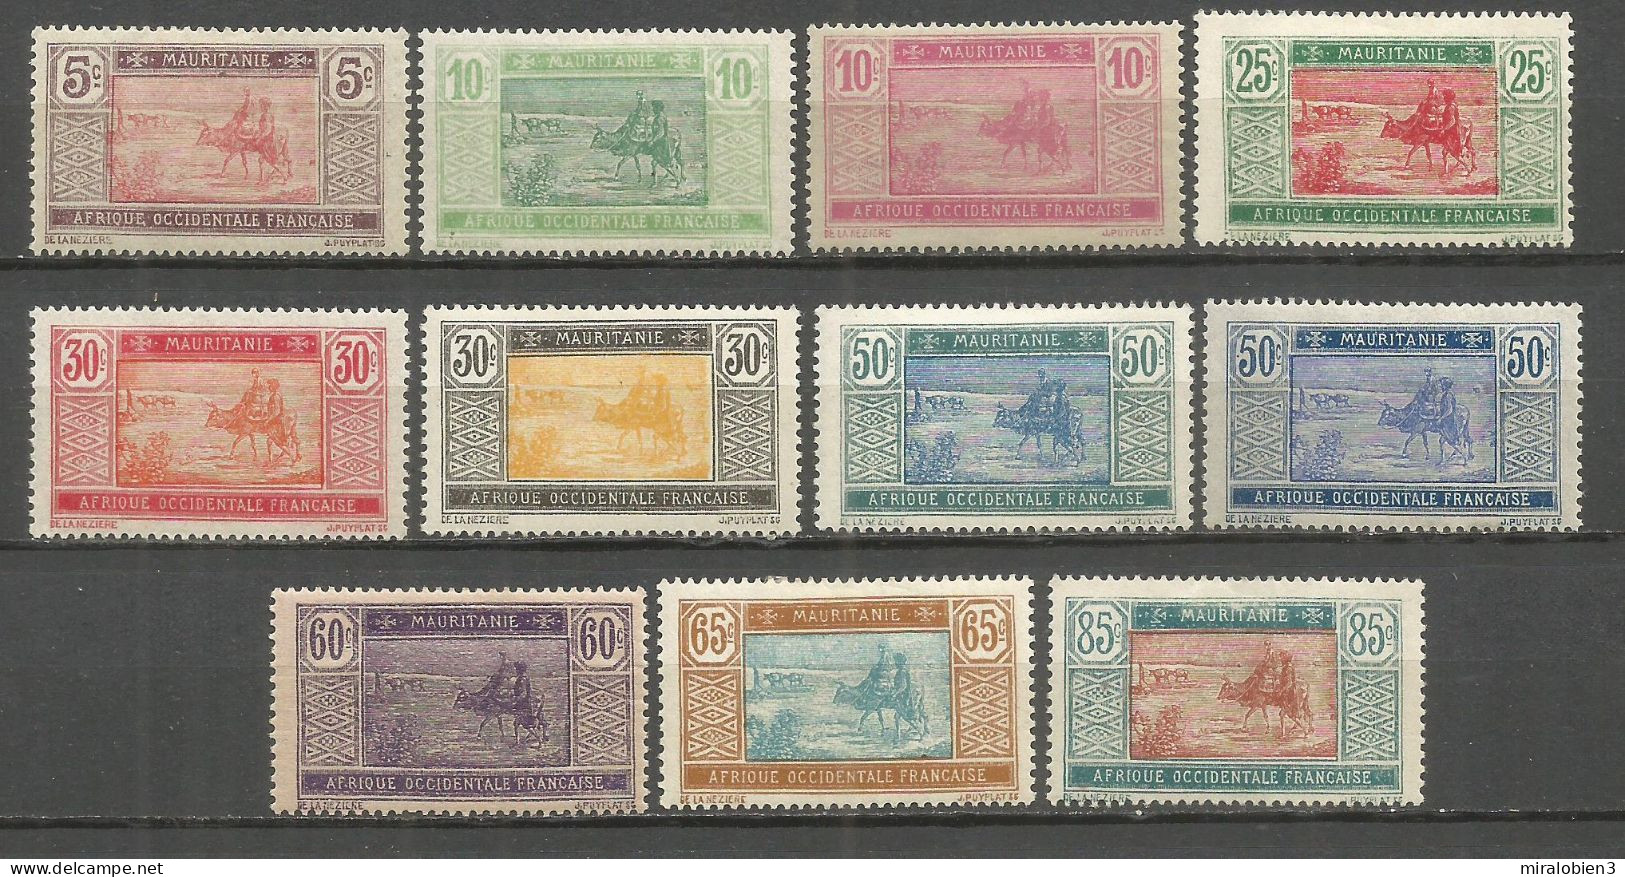 MAURITANIA COLONIA FRANCESA YVERT NUM. 39/49 * SERIE COMPLETA CON FIJASELLOS - Unused Stamps